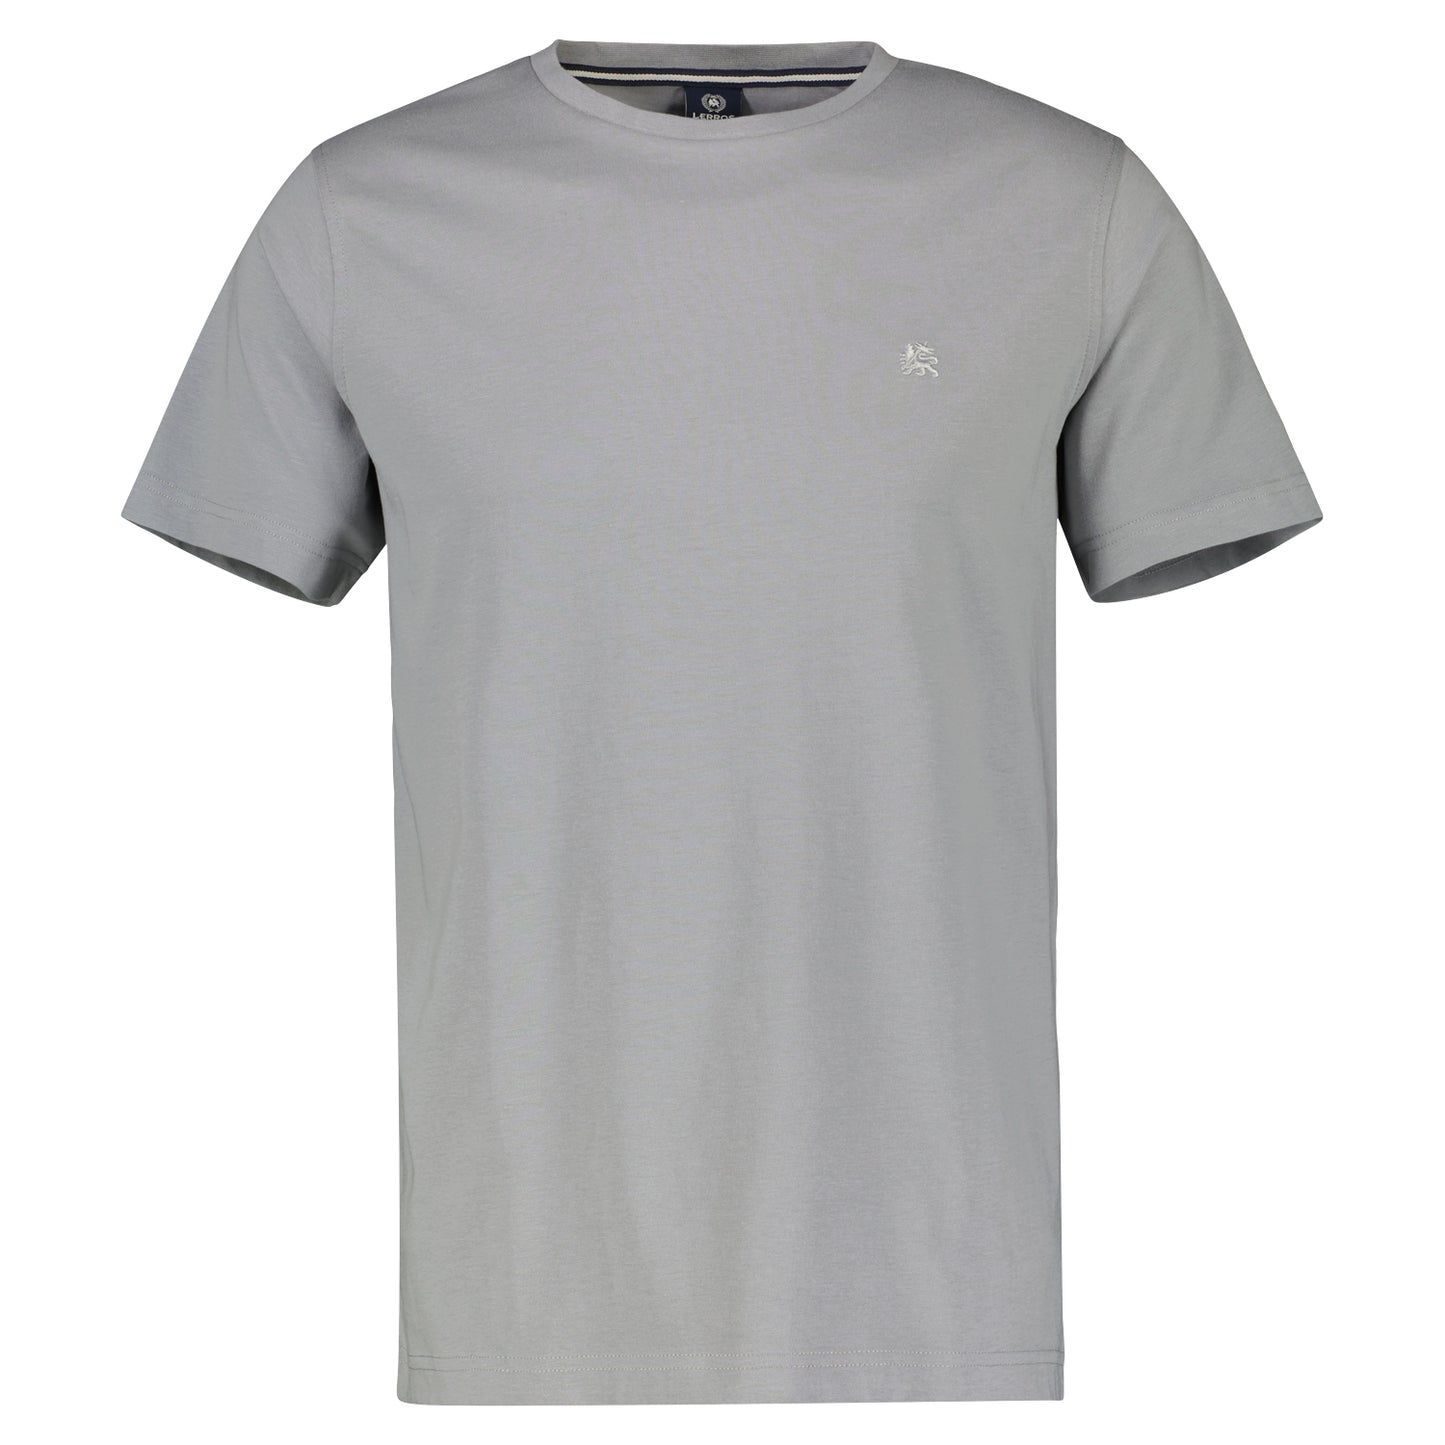 Basic Cotton T-Shirt